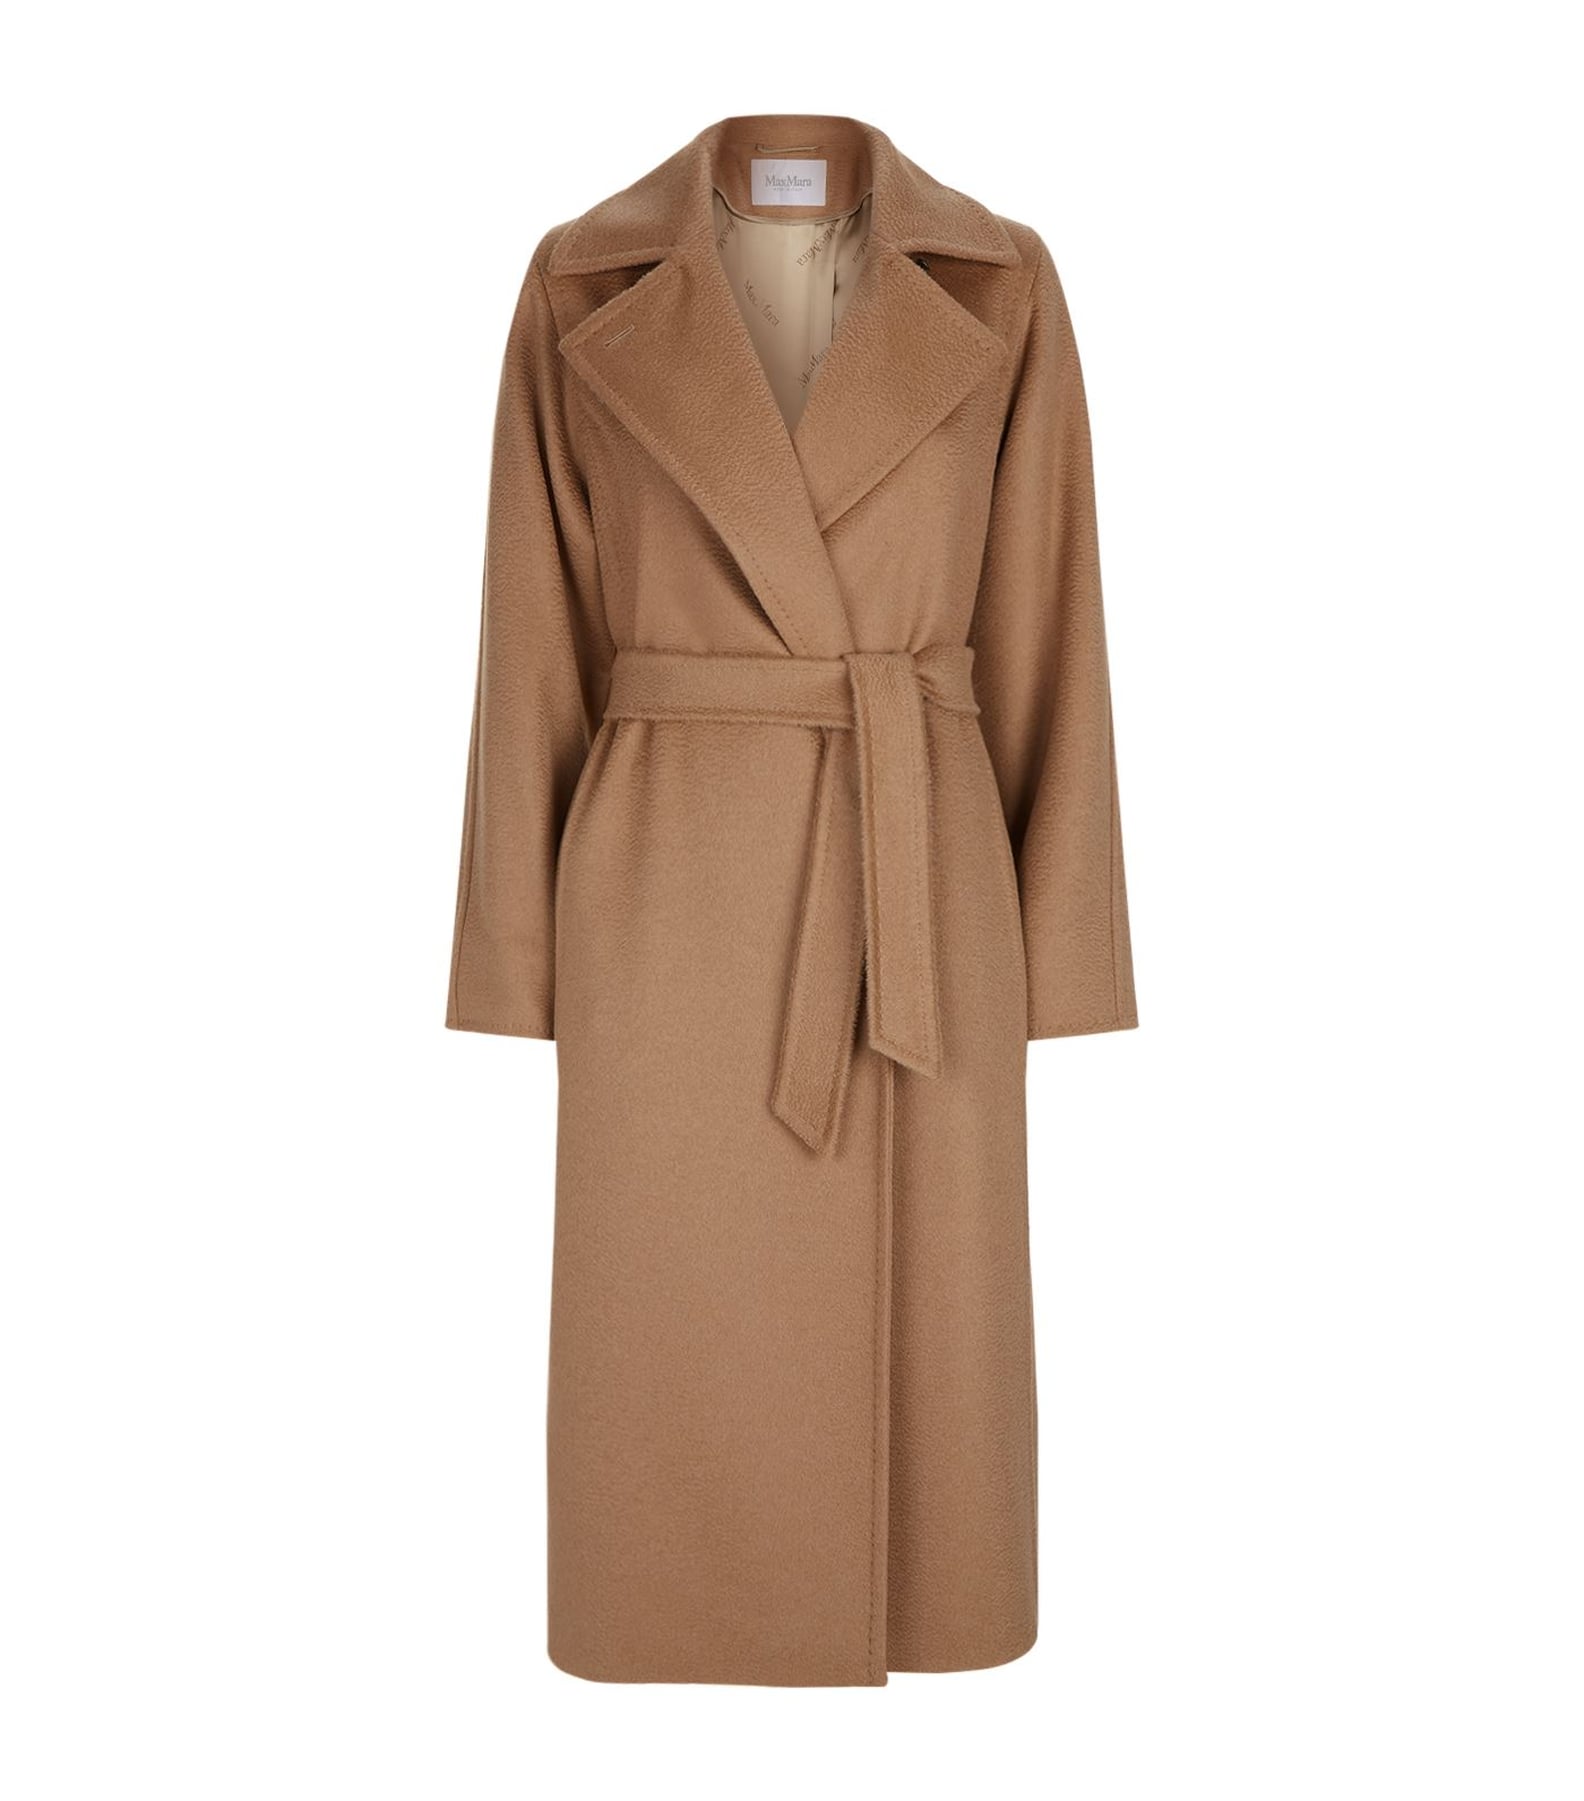 Coats Every Woman Should Own | POPSUGAR Fashion